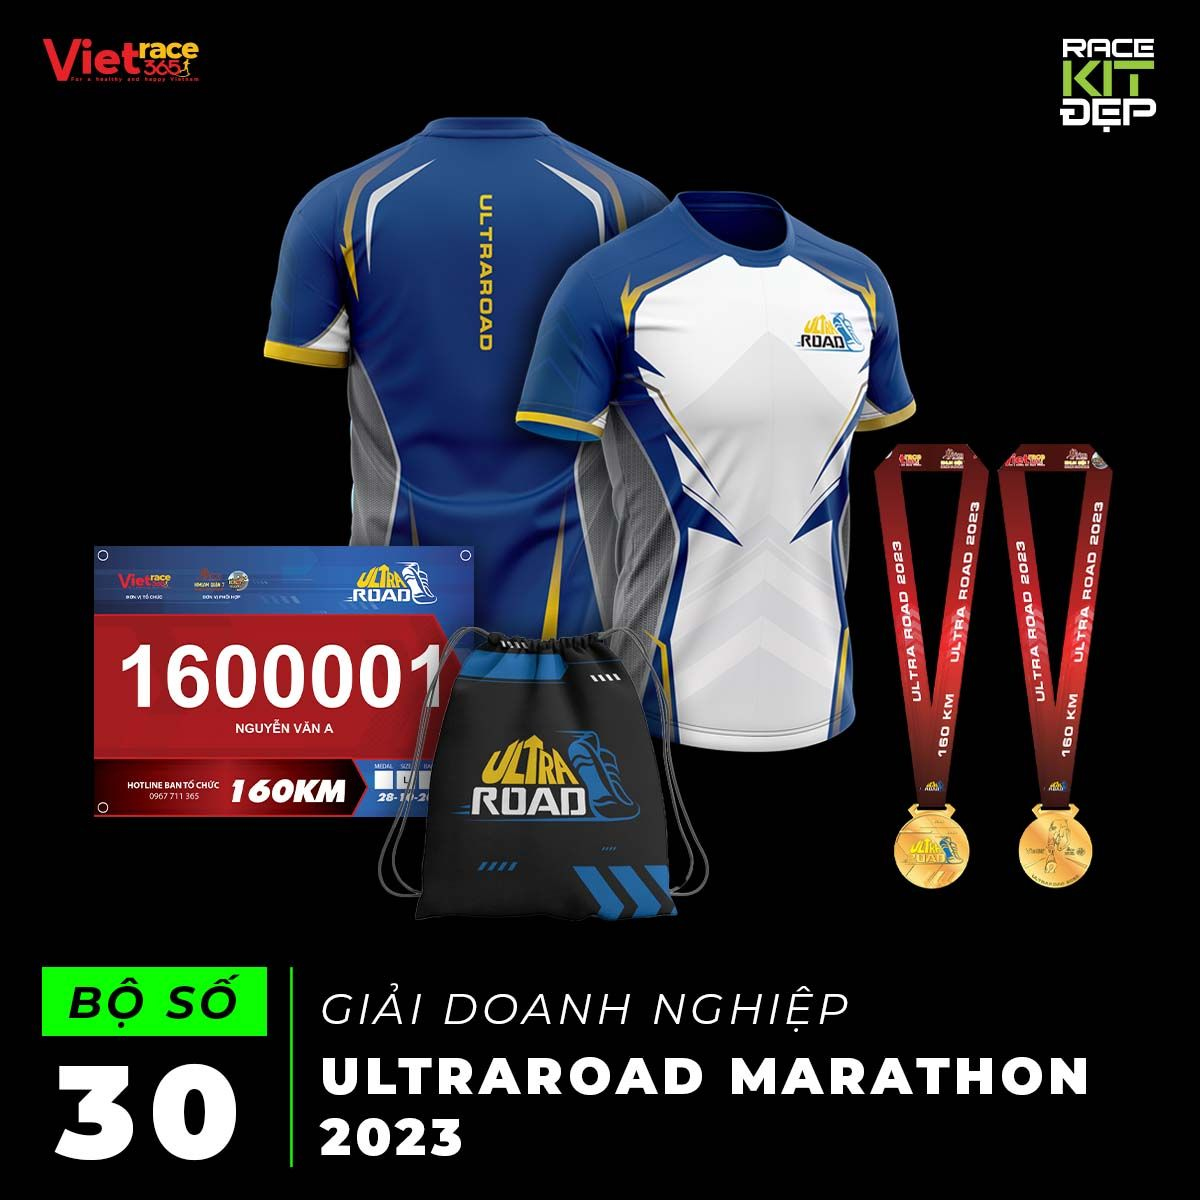 Ultraroad Marathon 2023